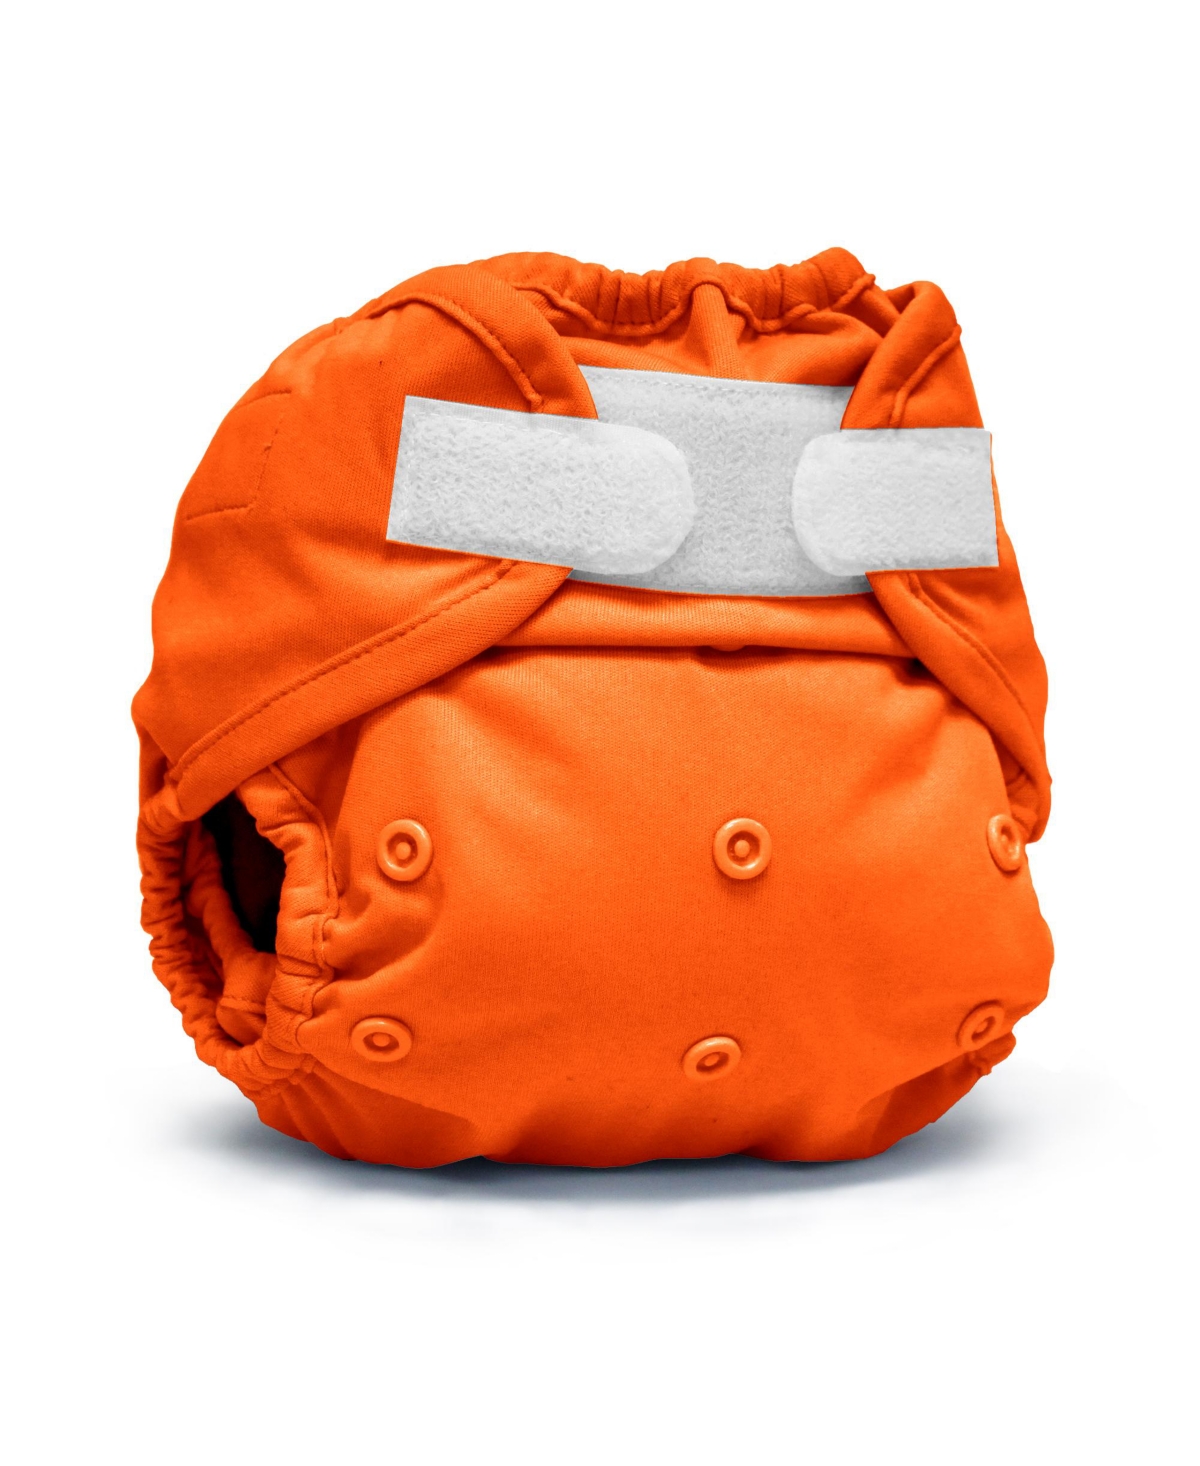 Kanga Care Babies' Rumparooz Reusable One Size Cloth Diaper Cover Aplix In Orange